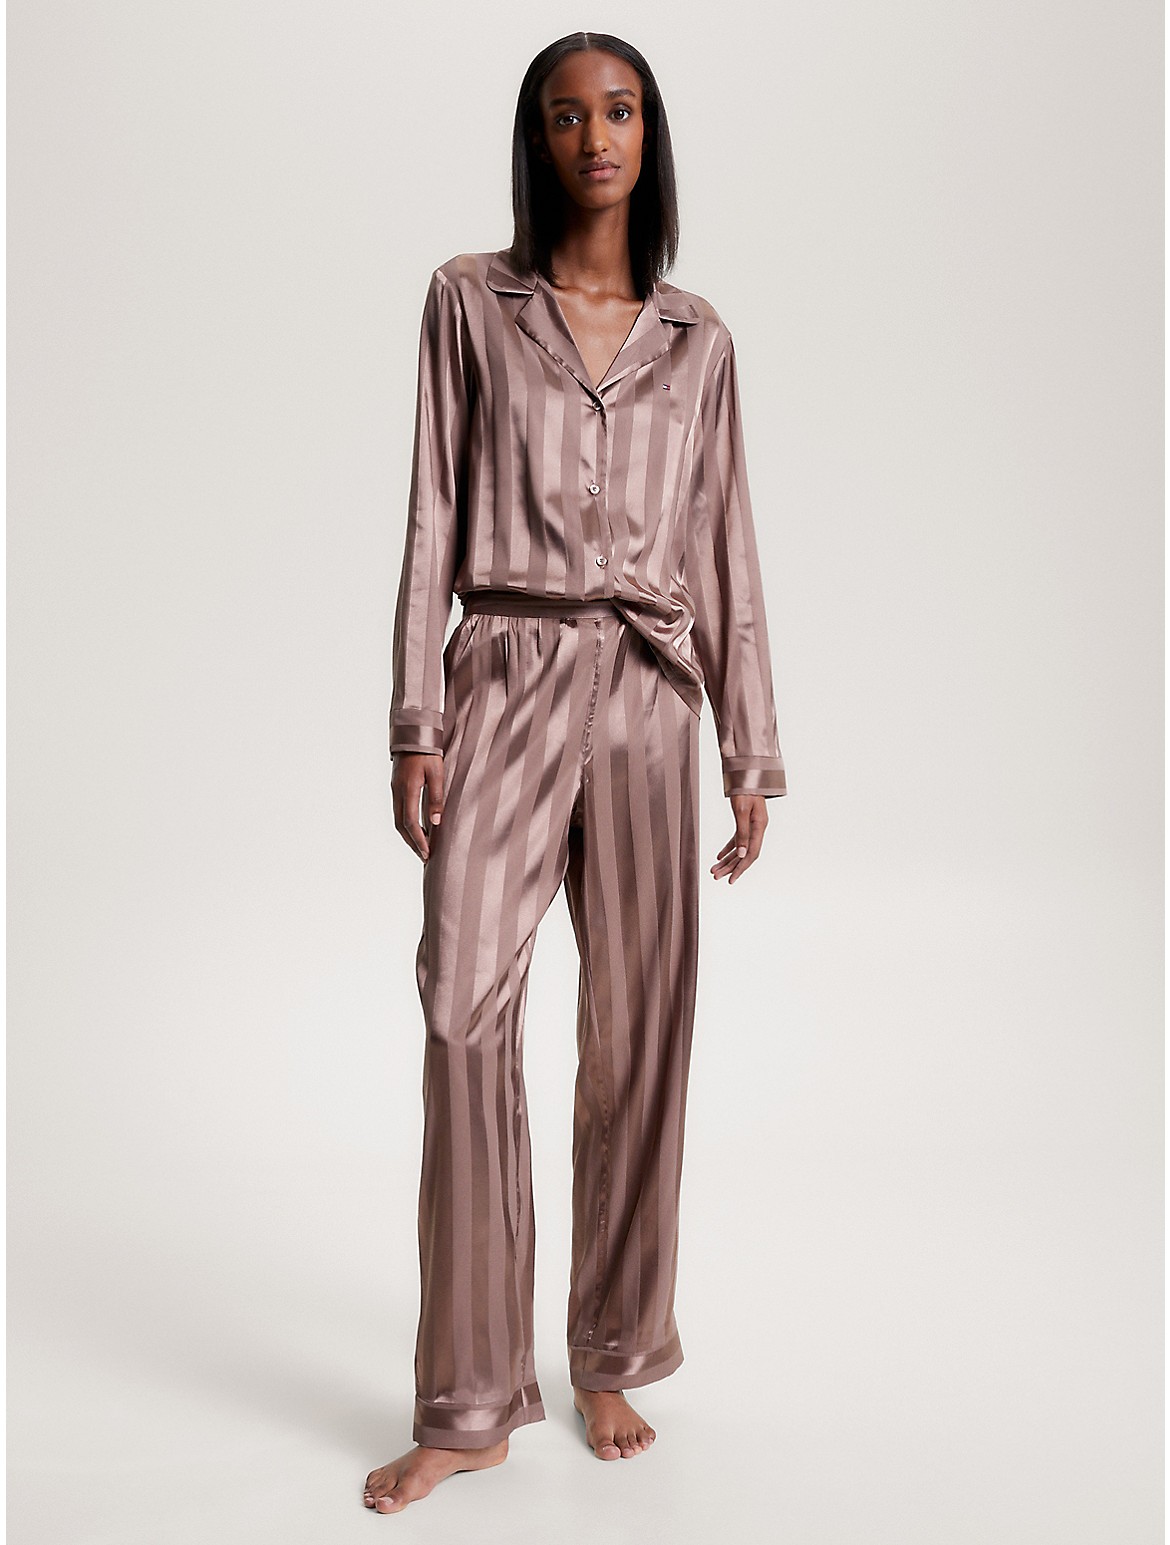 Tommy Hilfiger Women's Stripe Pajama Set - Pink - L